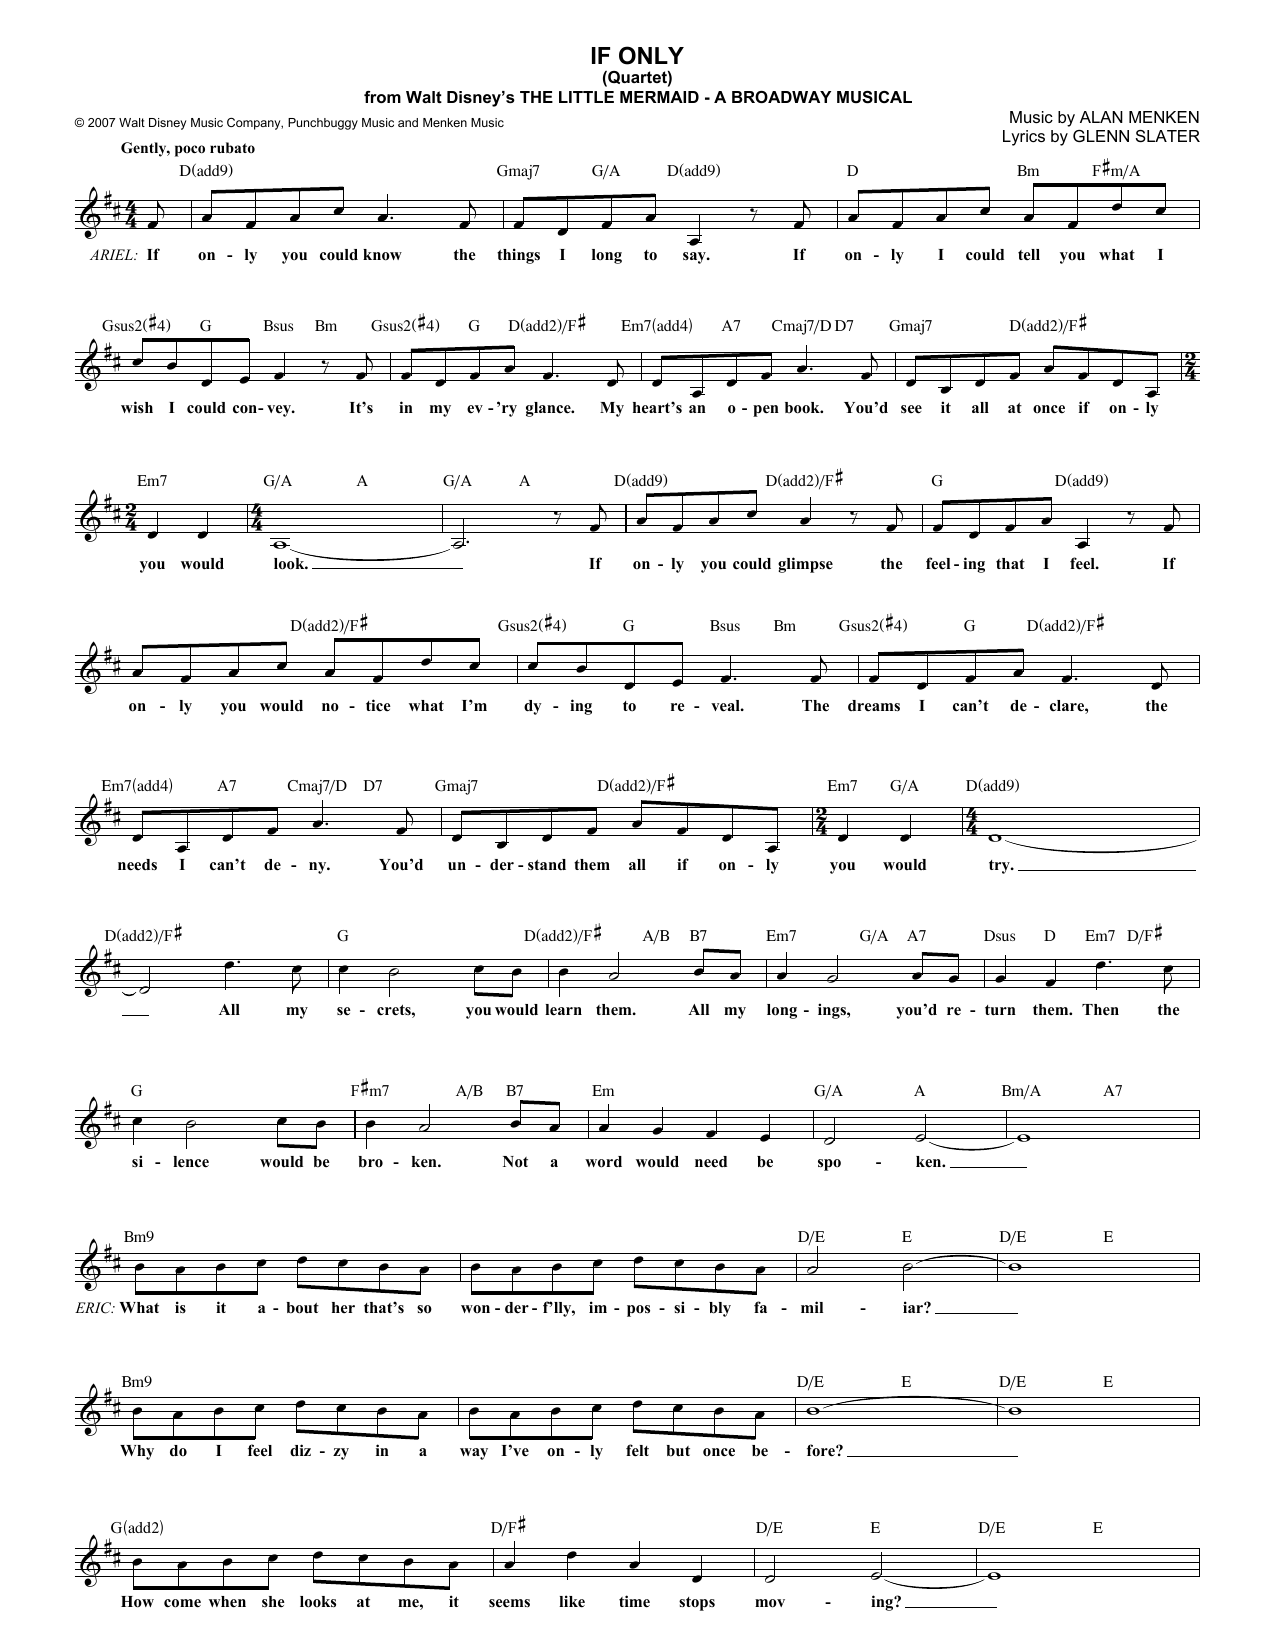 Alan Menken If Only (Quartet) Sheet Music Notes & Chords for Melody Line, Lyrics & Chords - Download or Print PDF